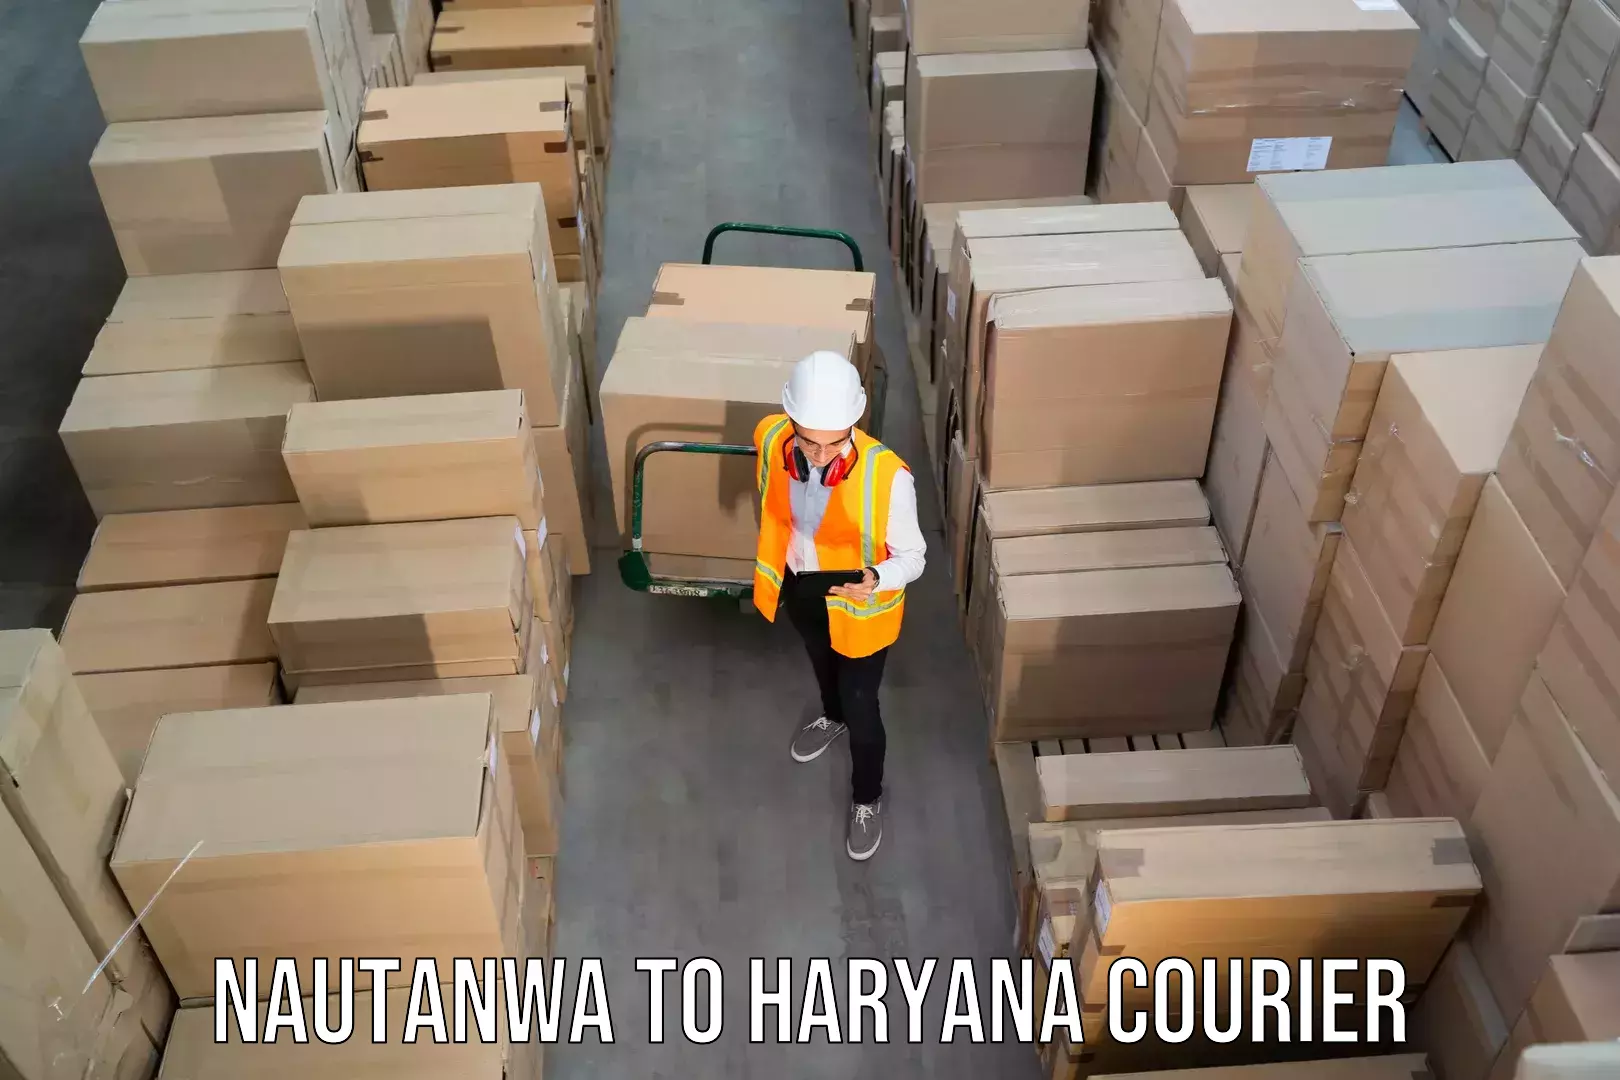 Nationwide parcel services Nautanwa to Haryana